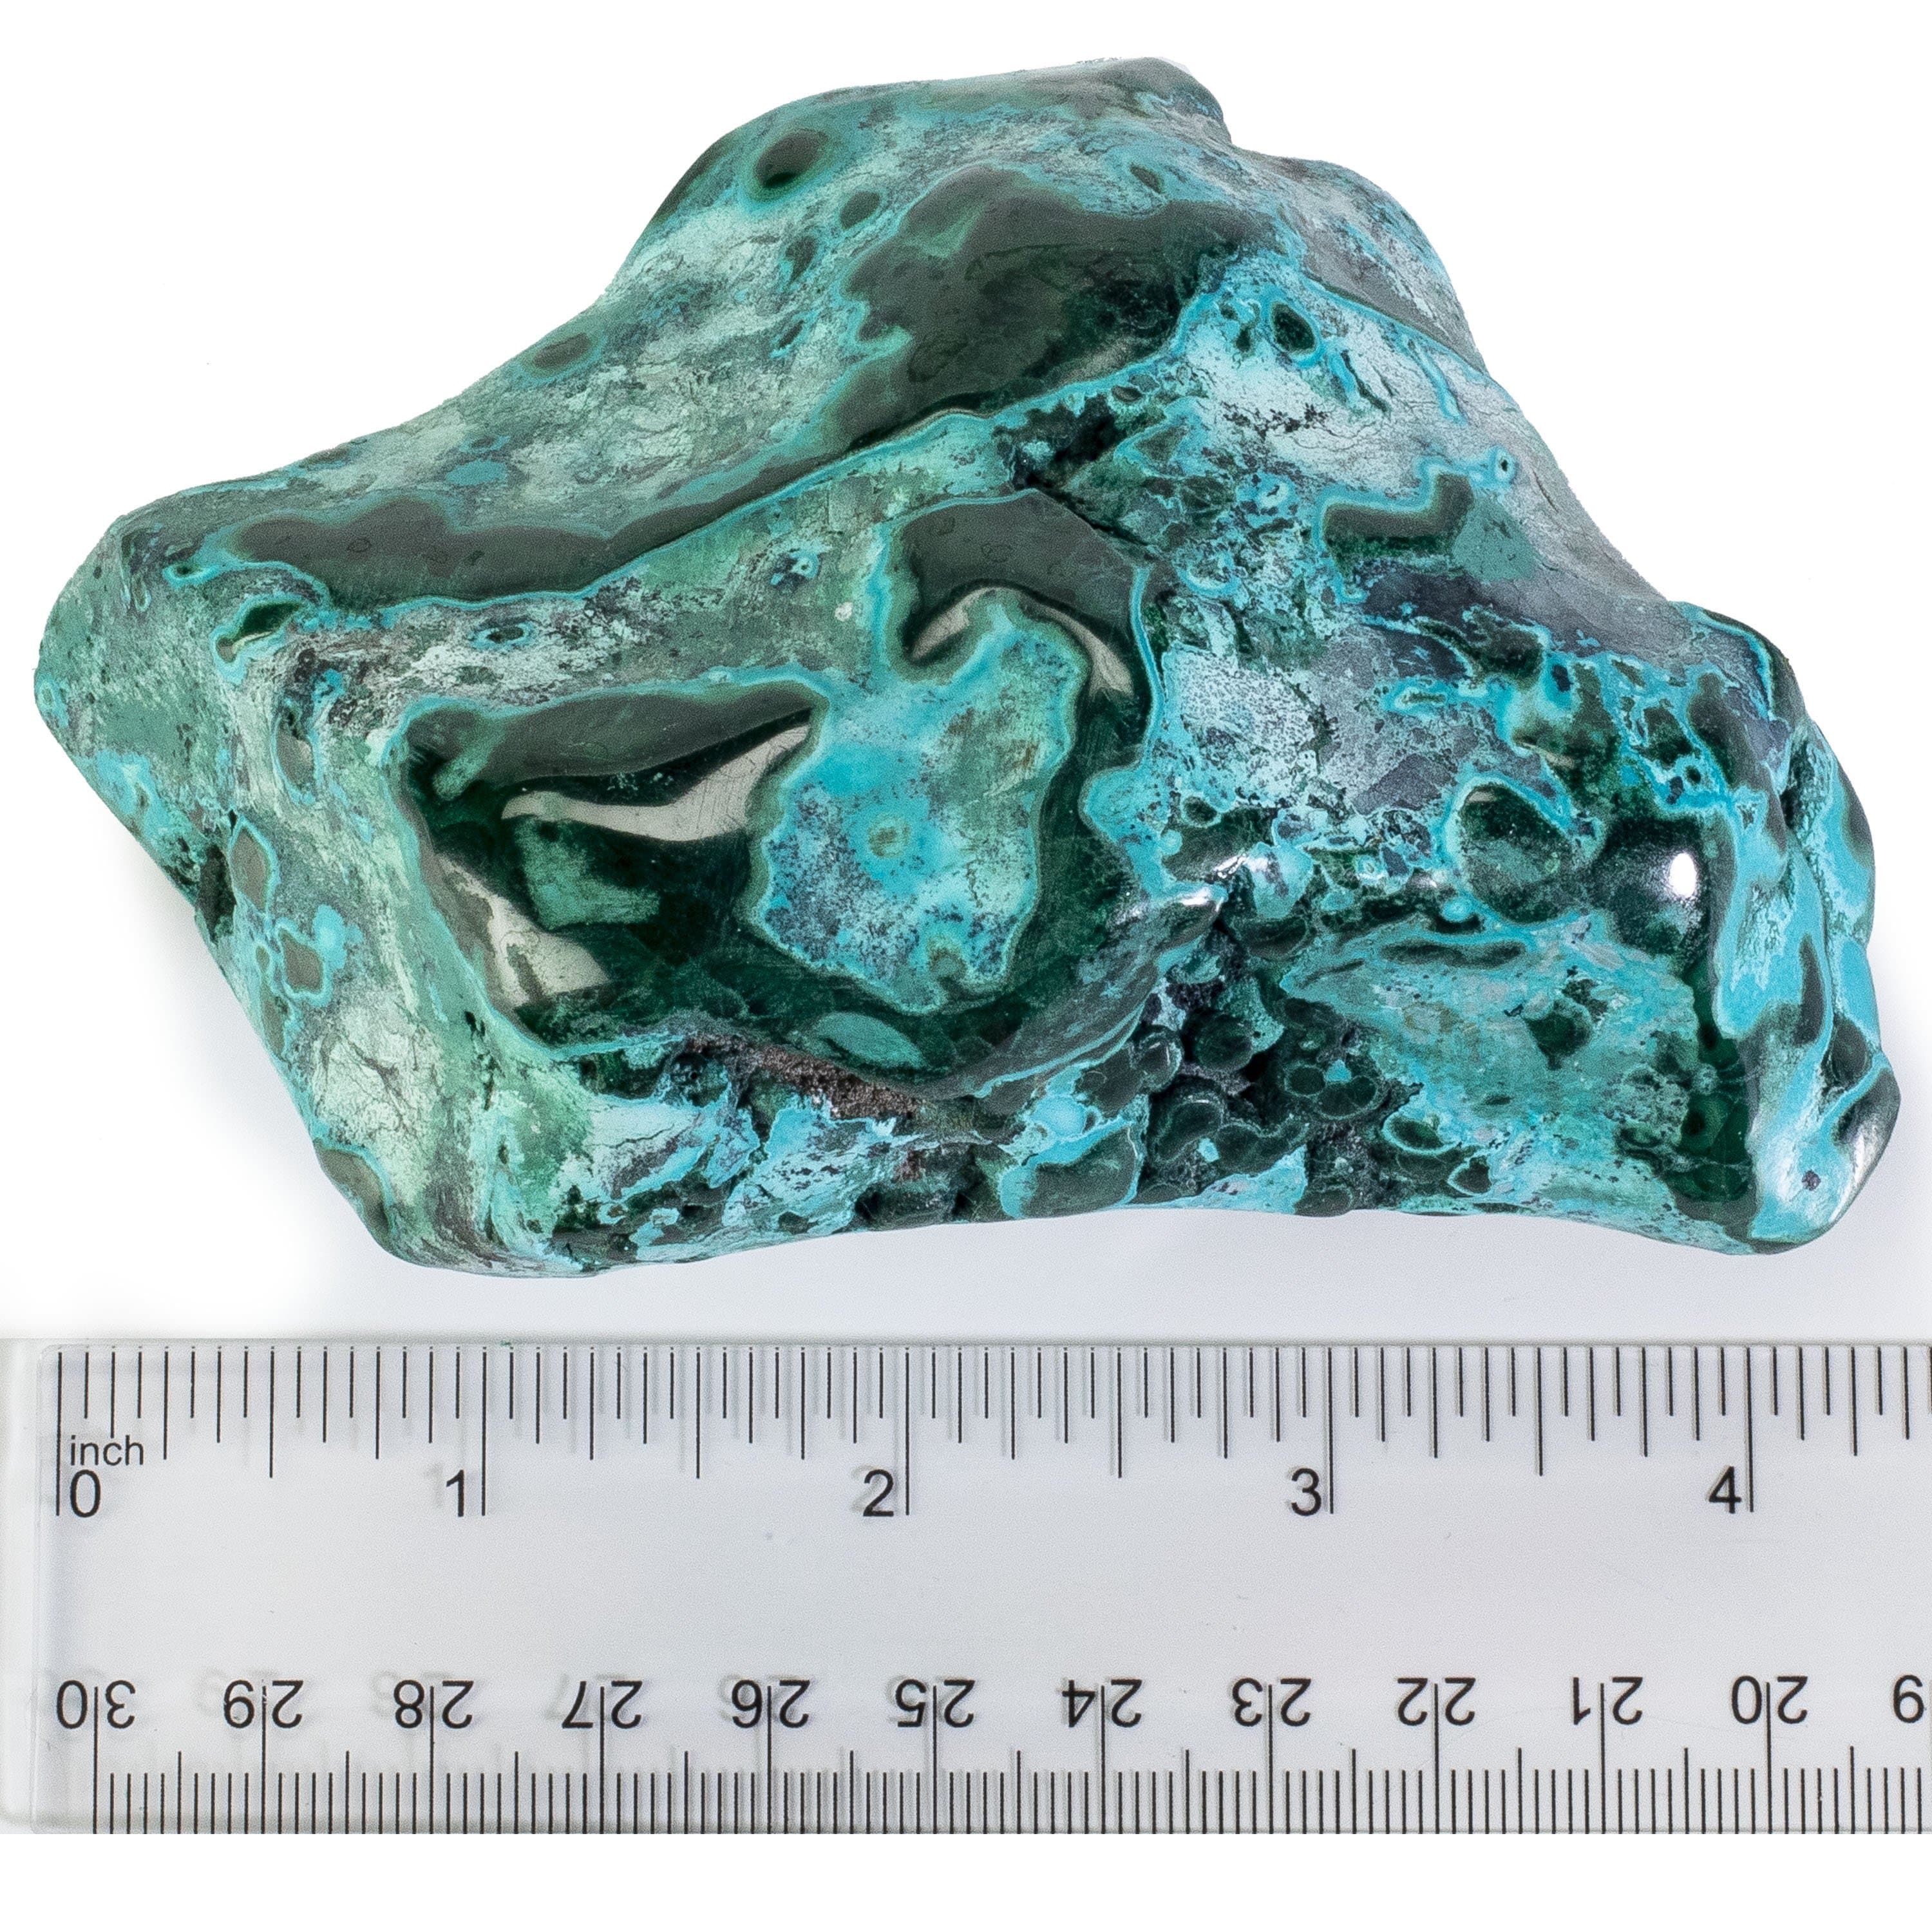 Kalifano Malachite Rare Natural Green Malachite with Blue Chrysocolla Freeform Specimen from Congo - 363 g / 0.8 lbs MAC400.003